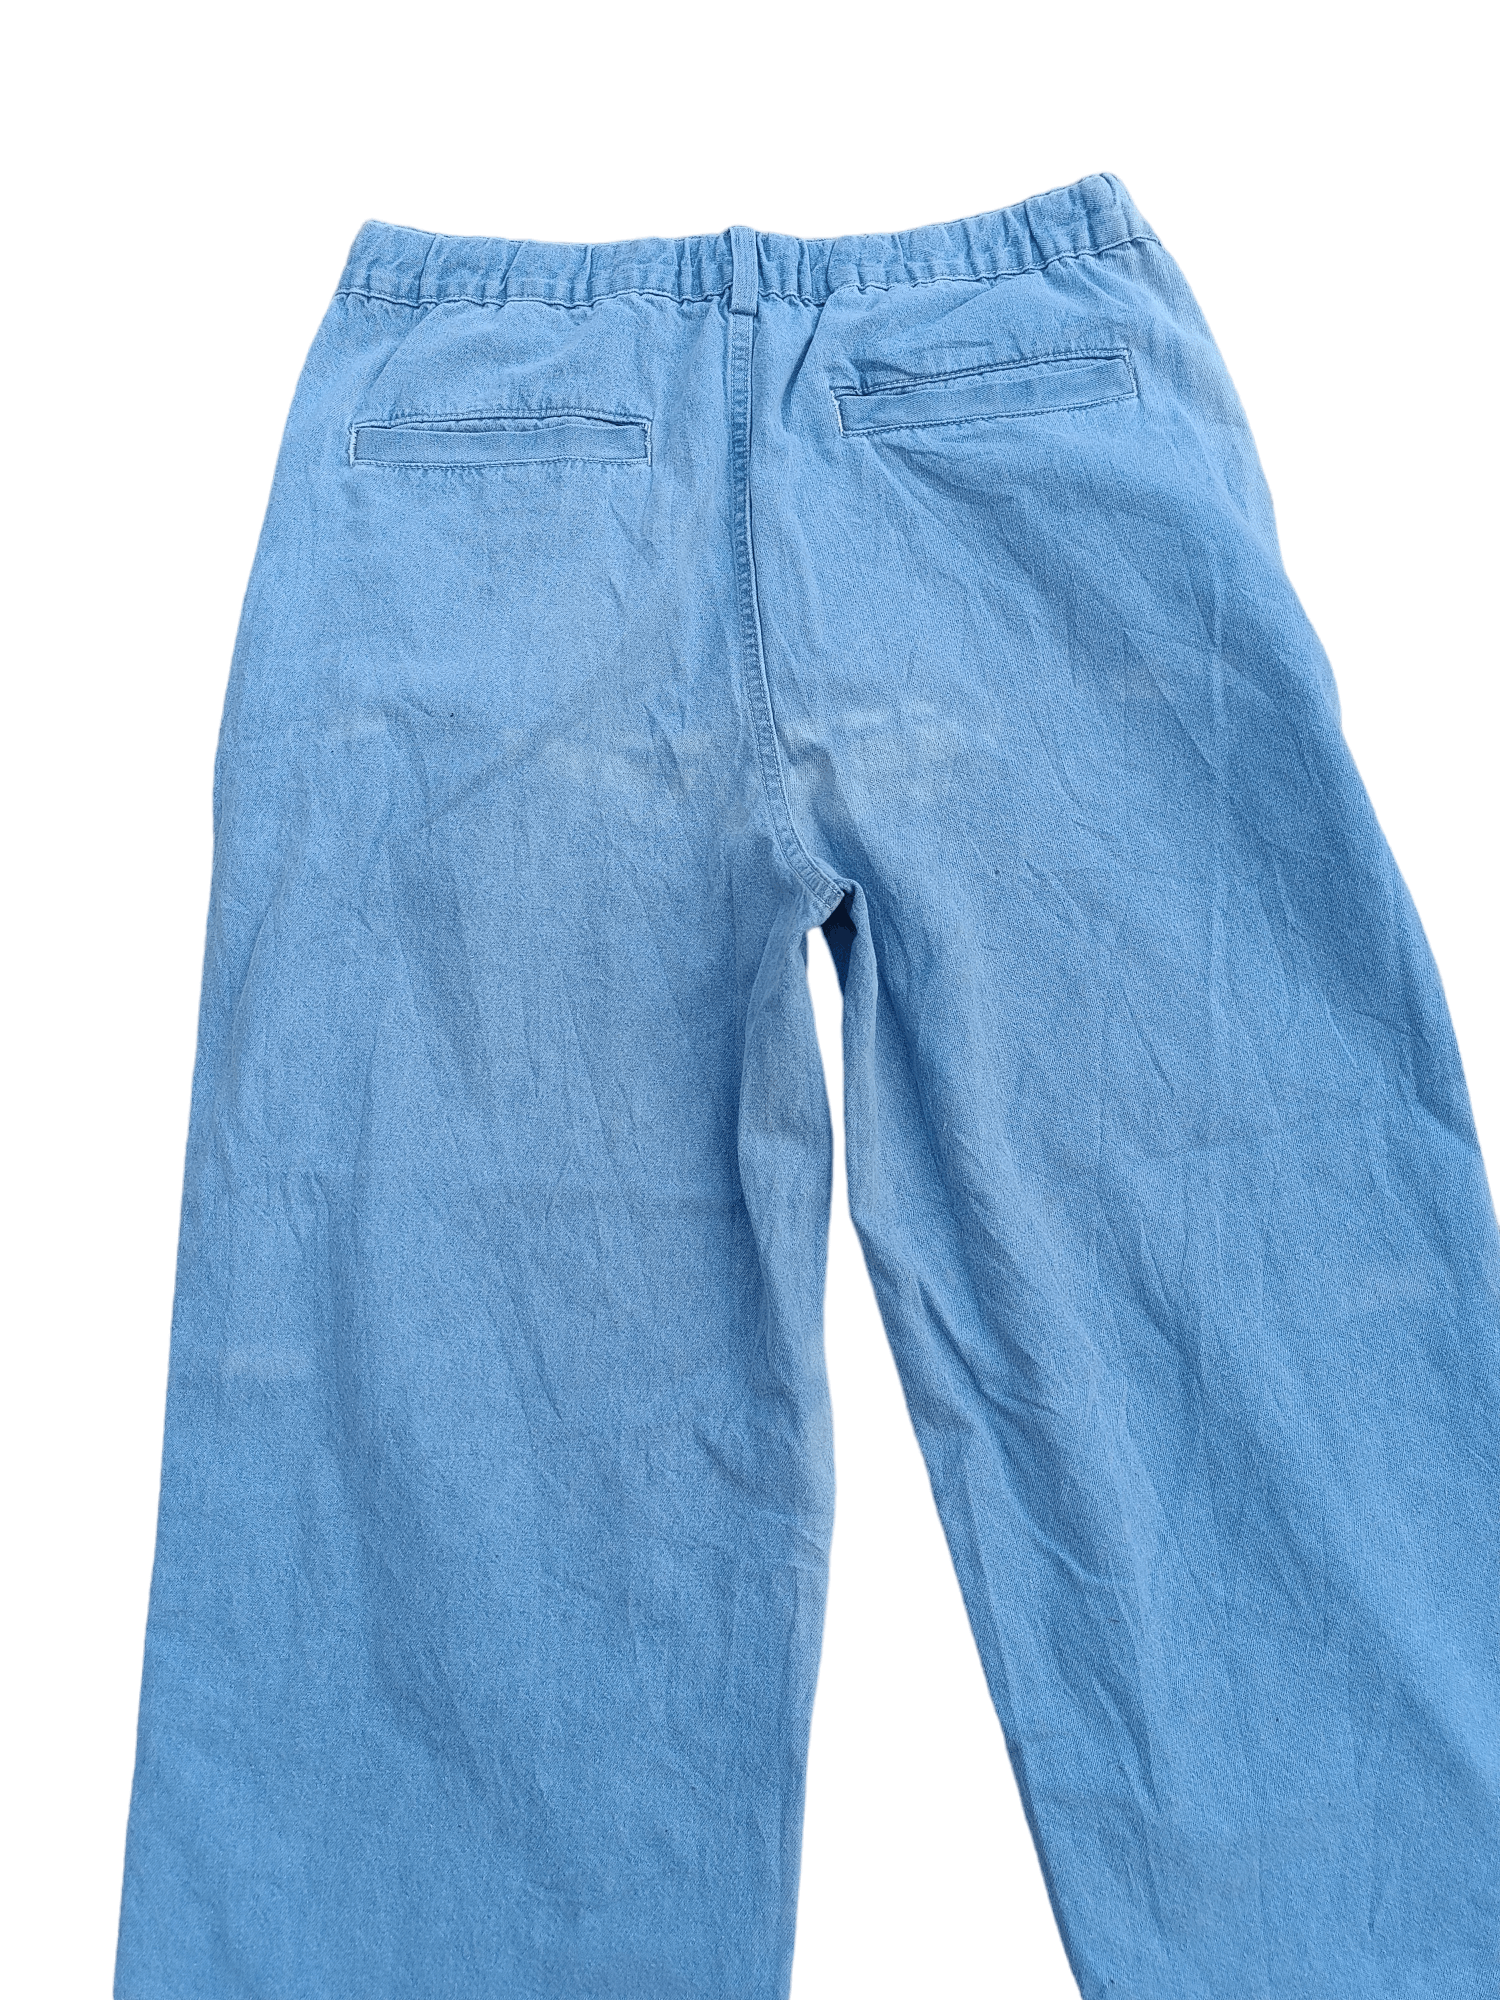 Japanese Brand Vintage Japanese Gu Baggy Style Flare Jeans 30x30 Size US 32 / EU 48 - 4 Thumbnail